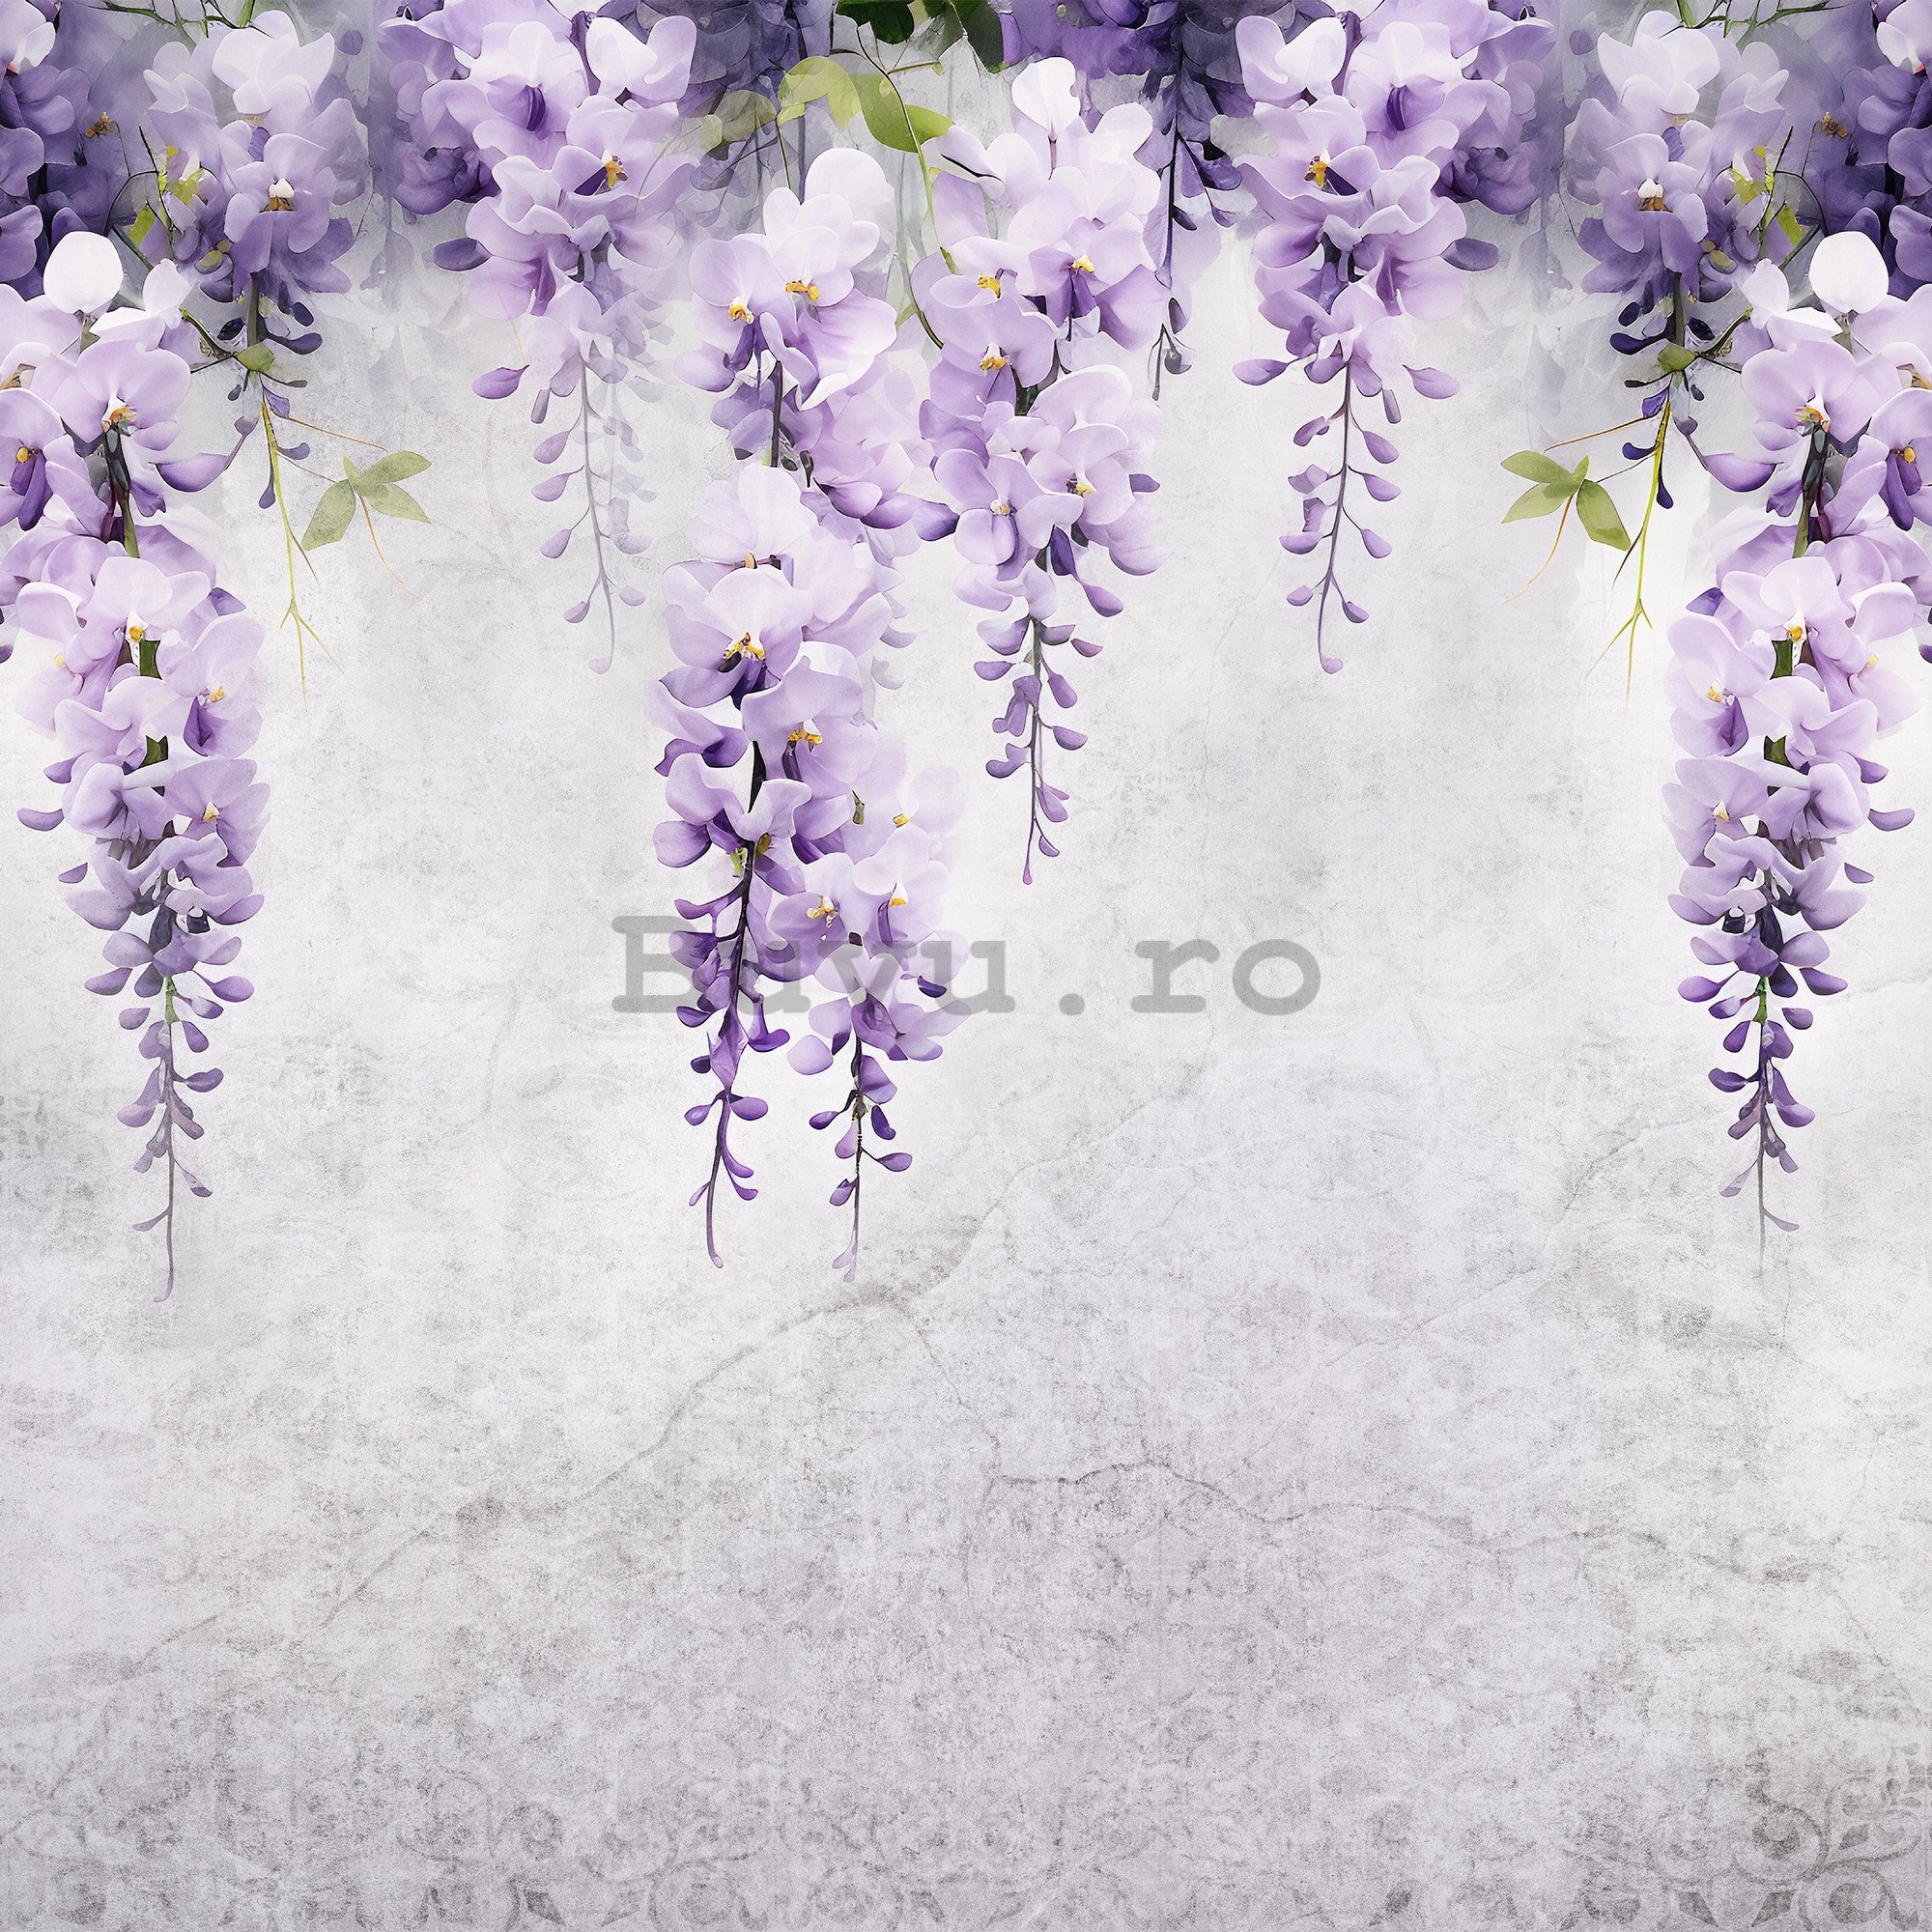 Fototapet vlies: Flowers Violet Wisteria Romantic (1) - 312x219cm